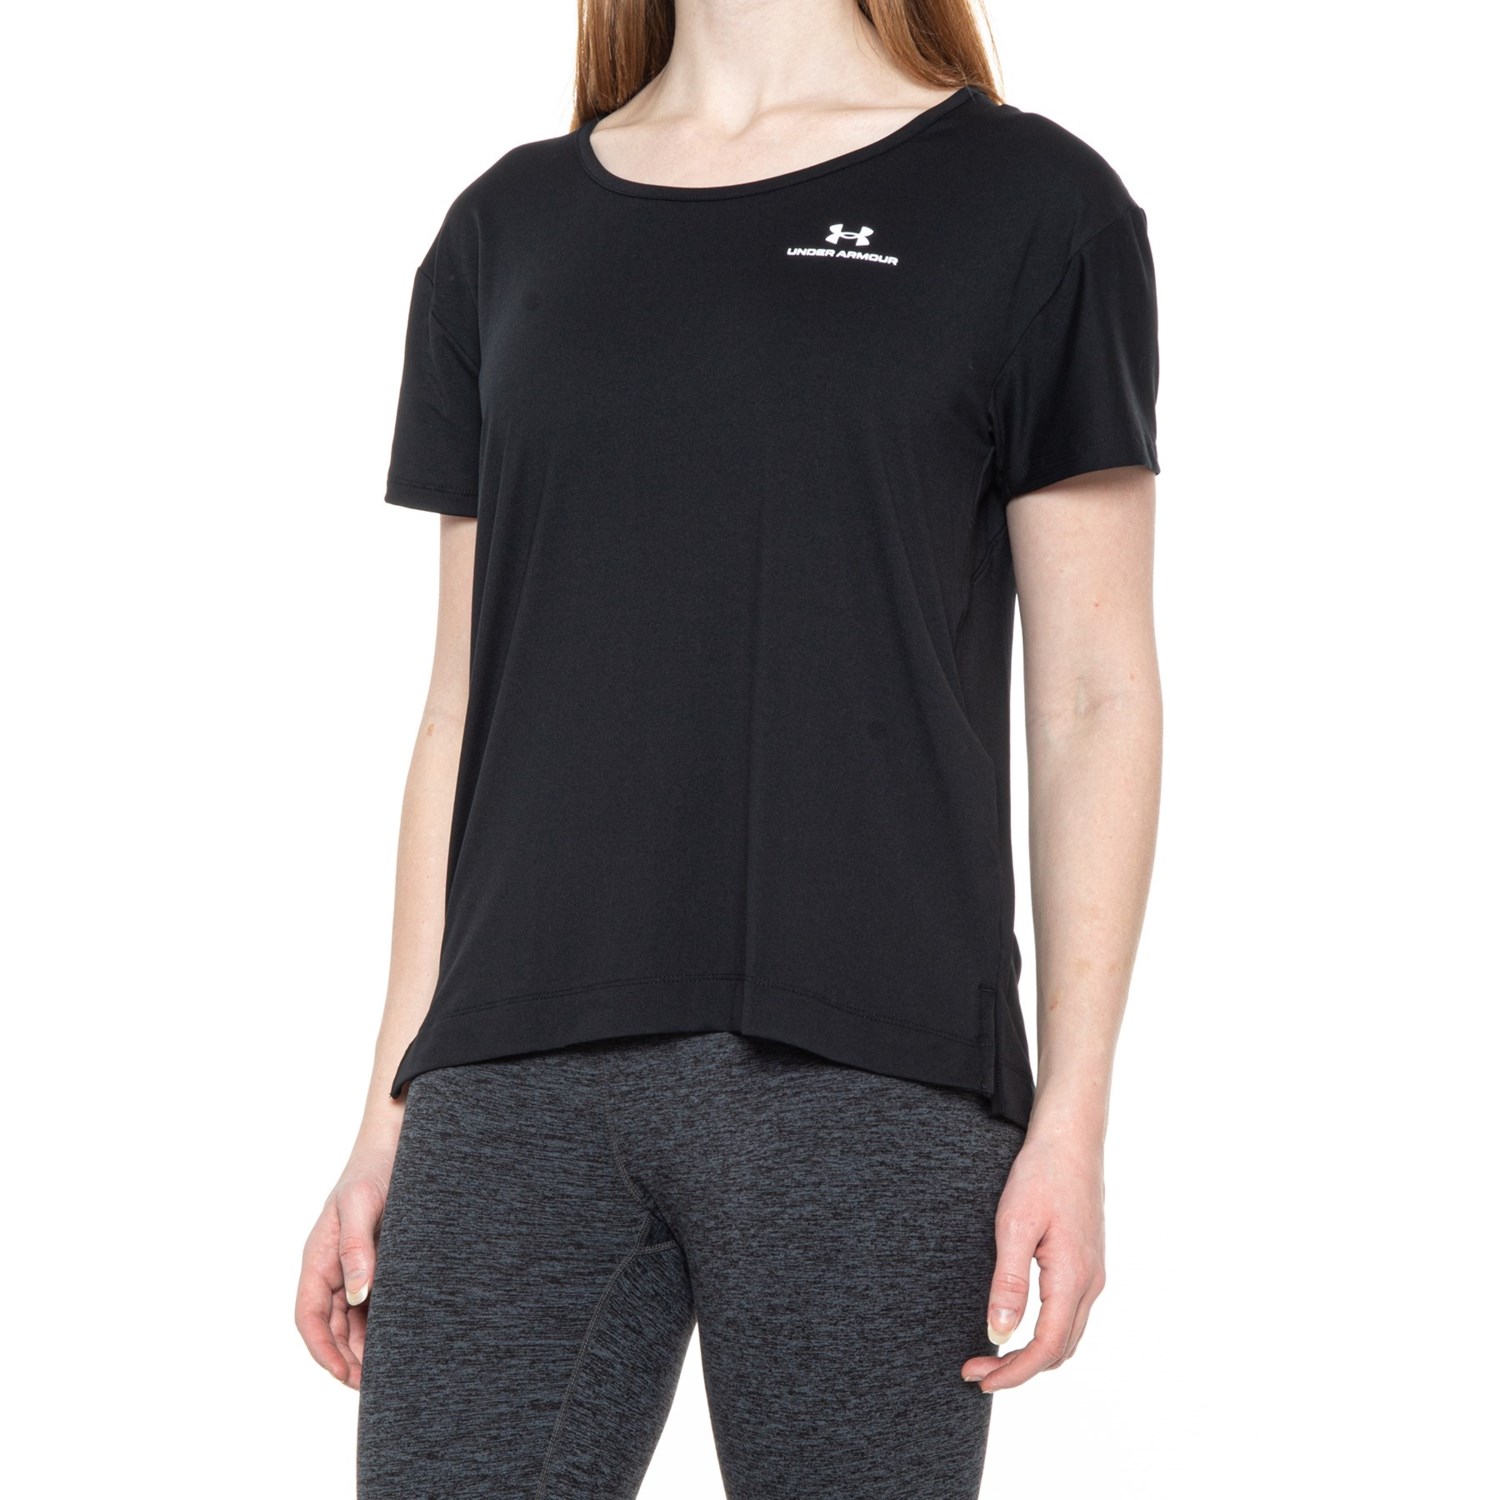 Under Armour RUSH Energy Core Shirt - Short Sleeve (For Women)